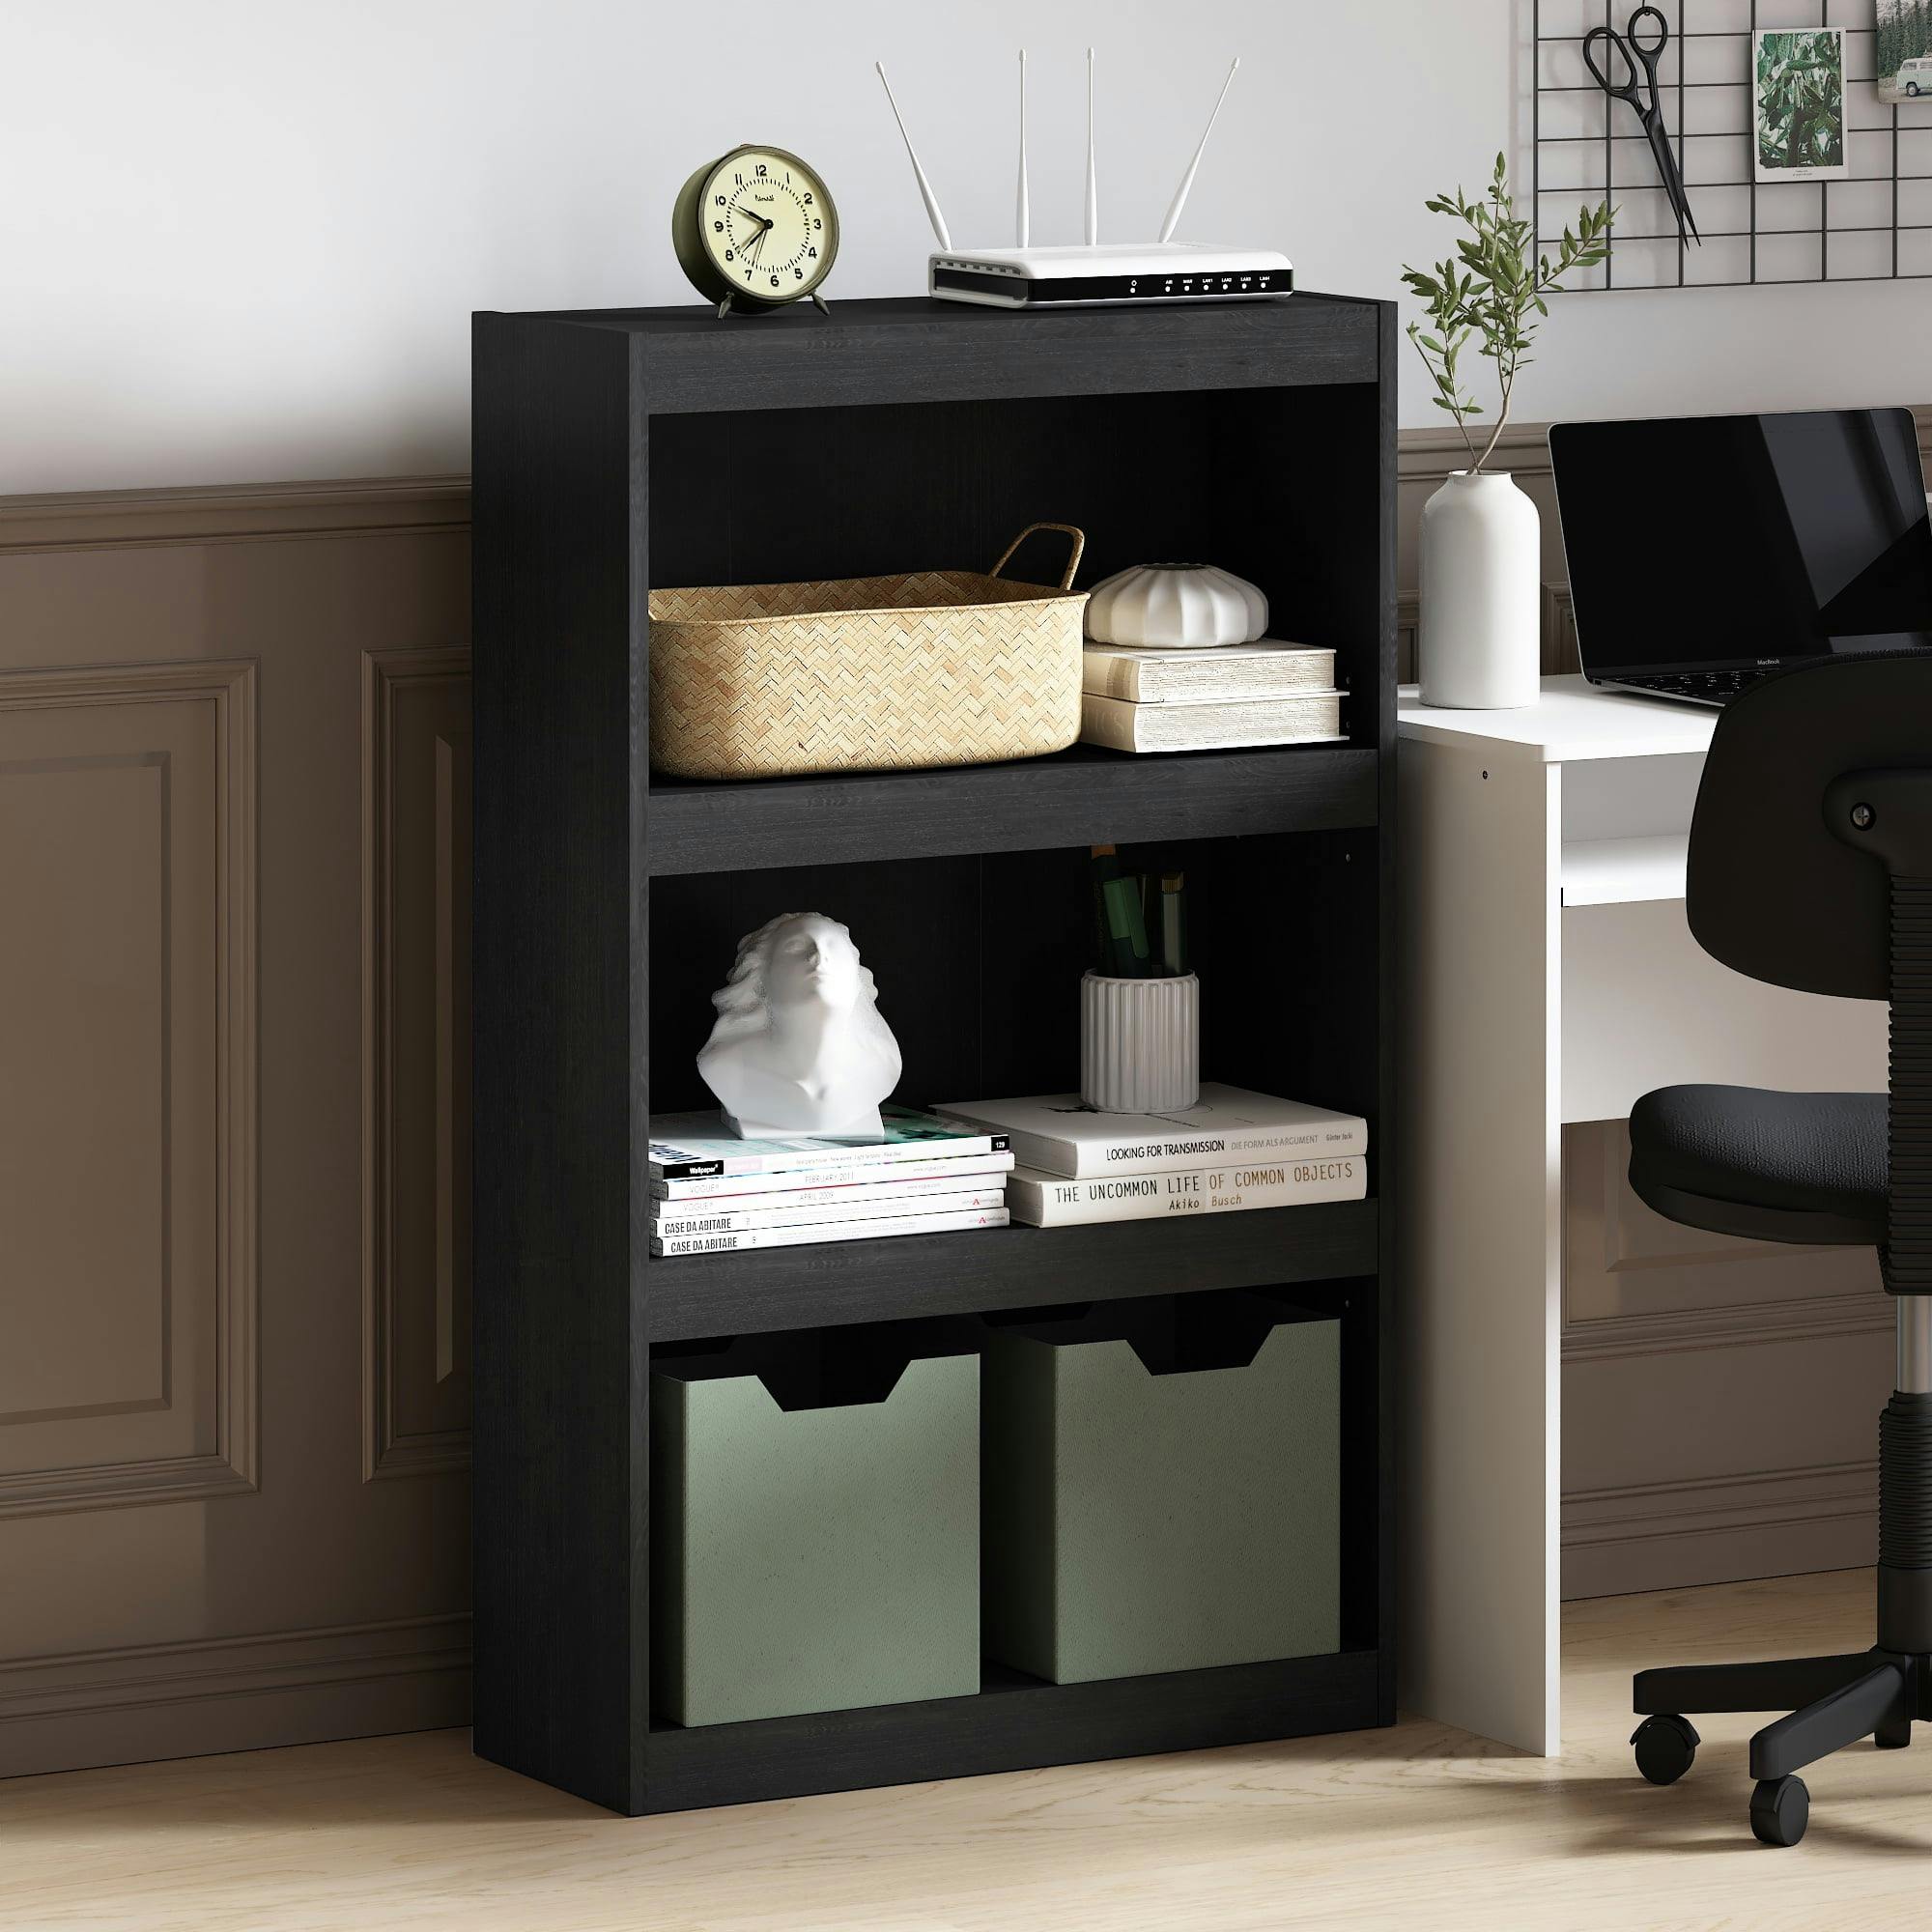 Malaysia Blackwood 3-Tier Adjustable Contemporary Shelf